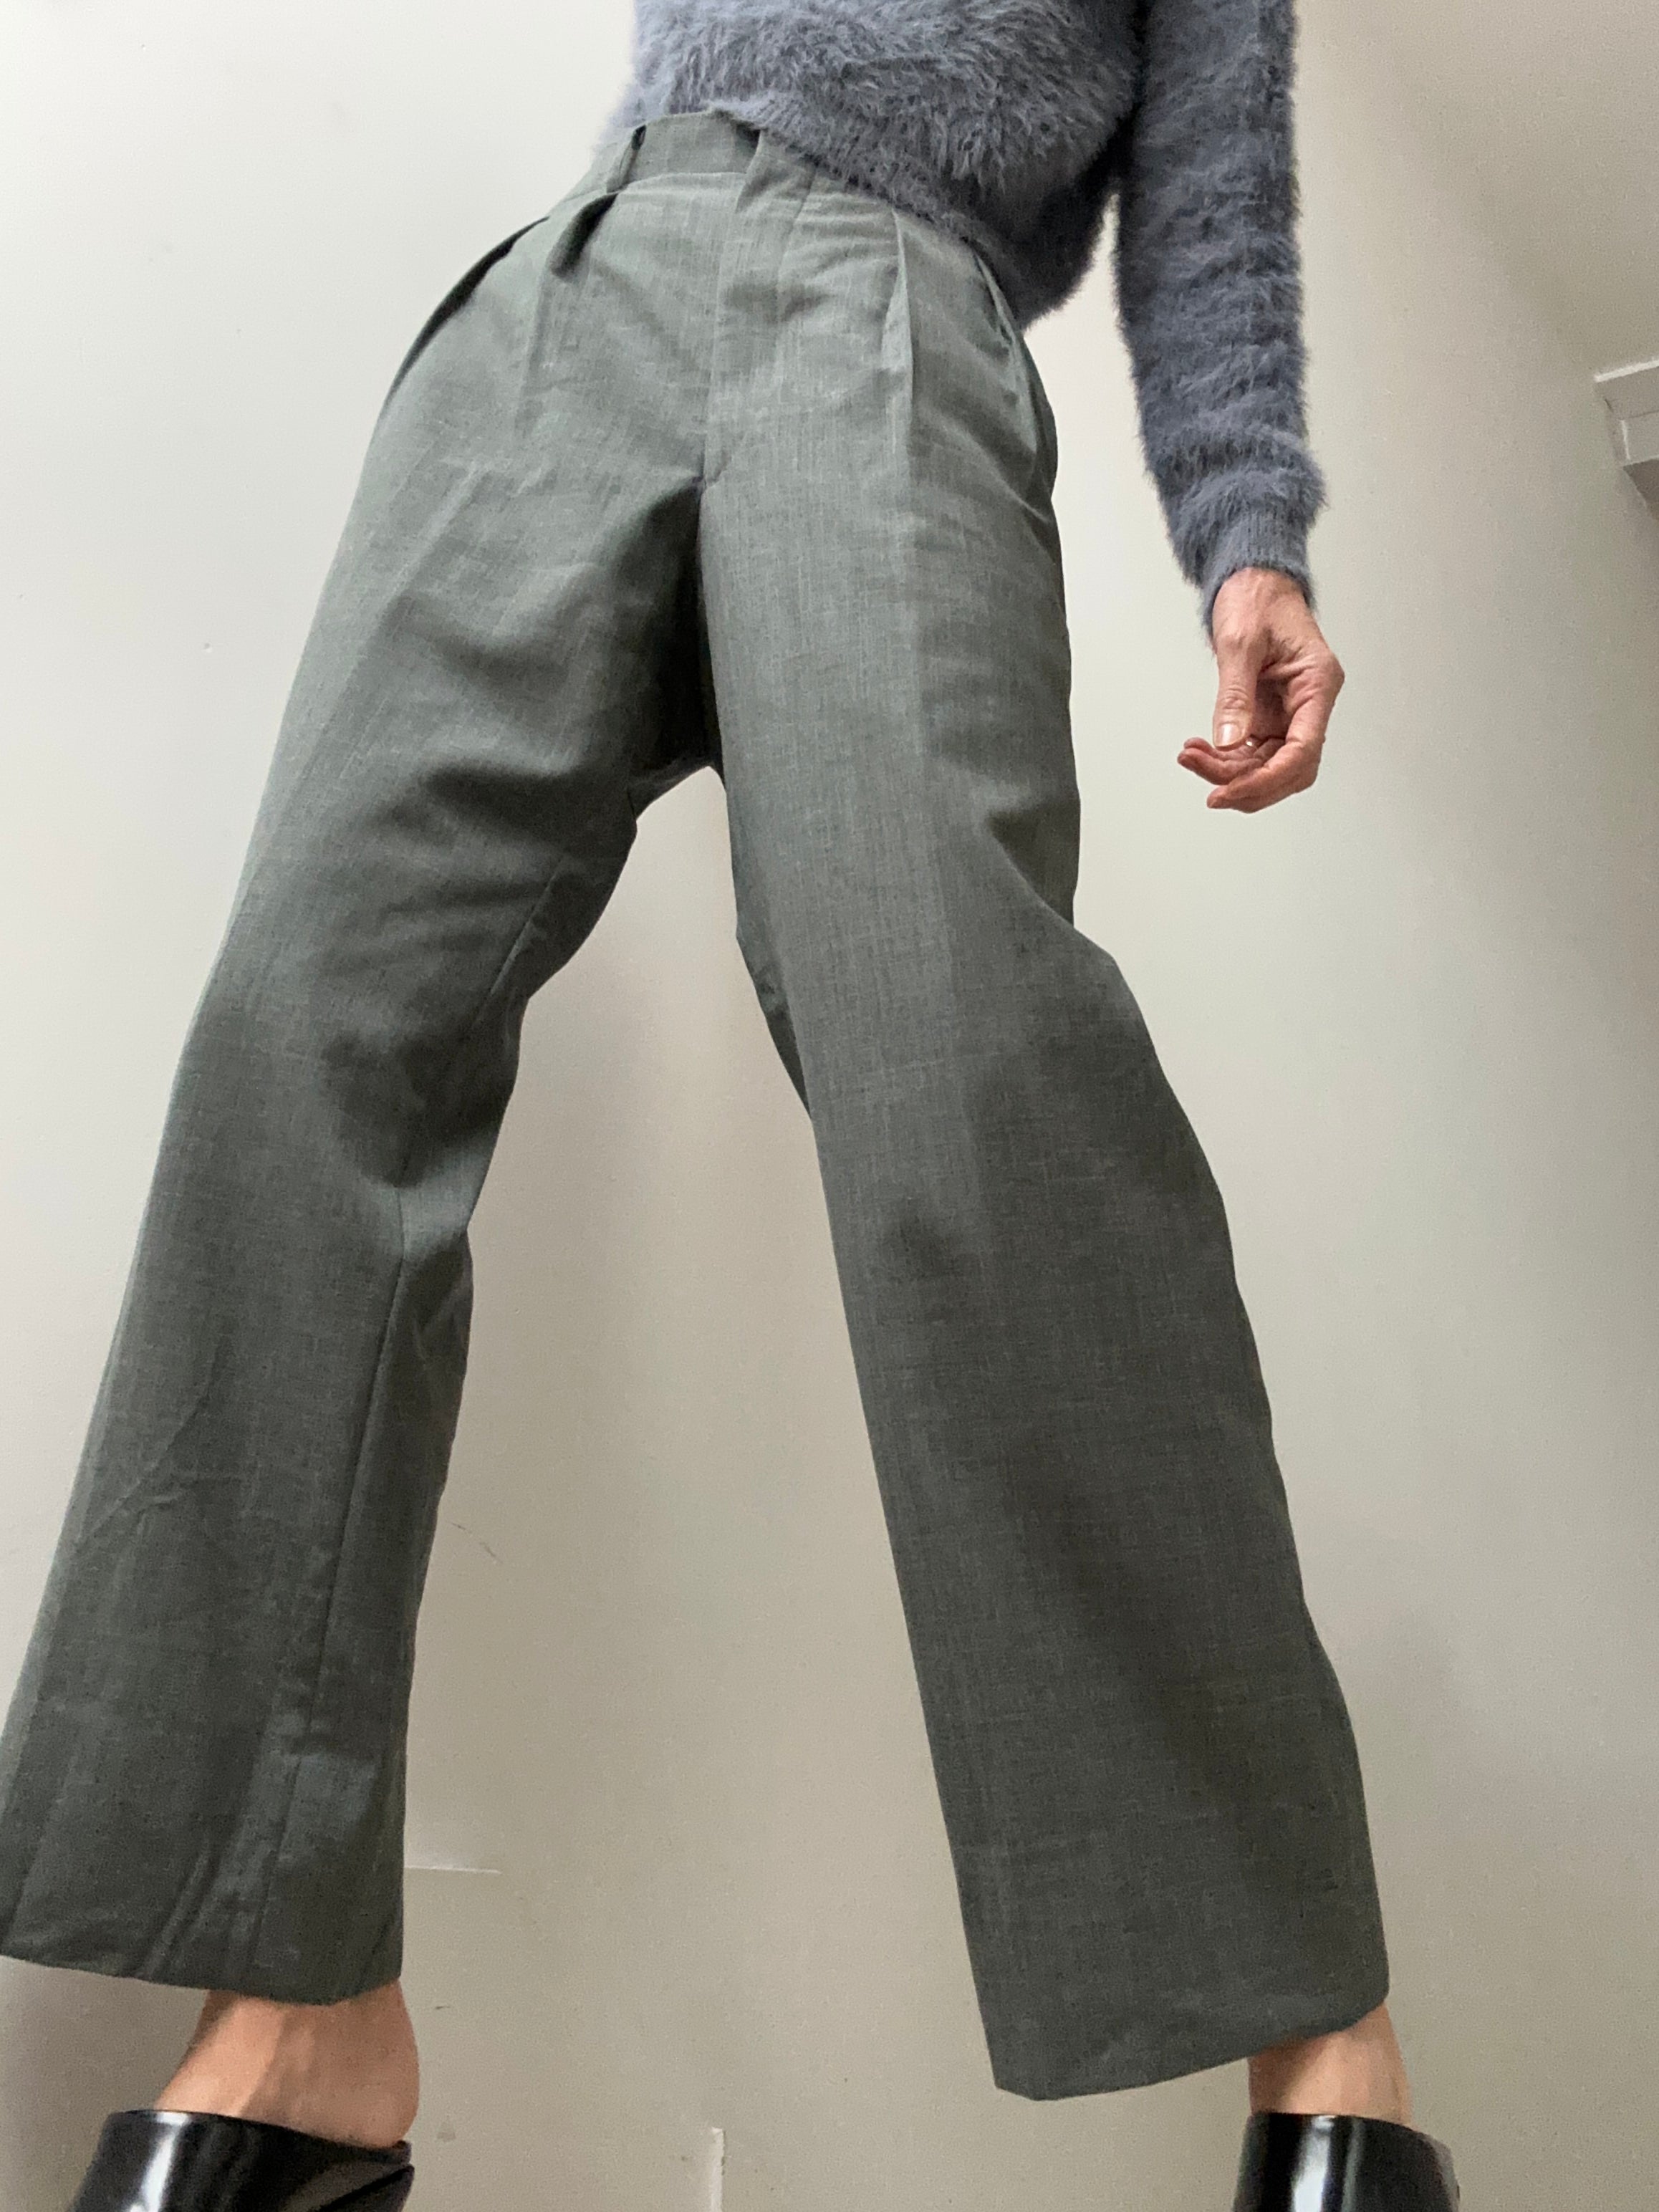 Future Nomads Pants Medium-Large Grey Light Wool Vintage Pants